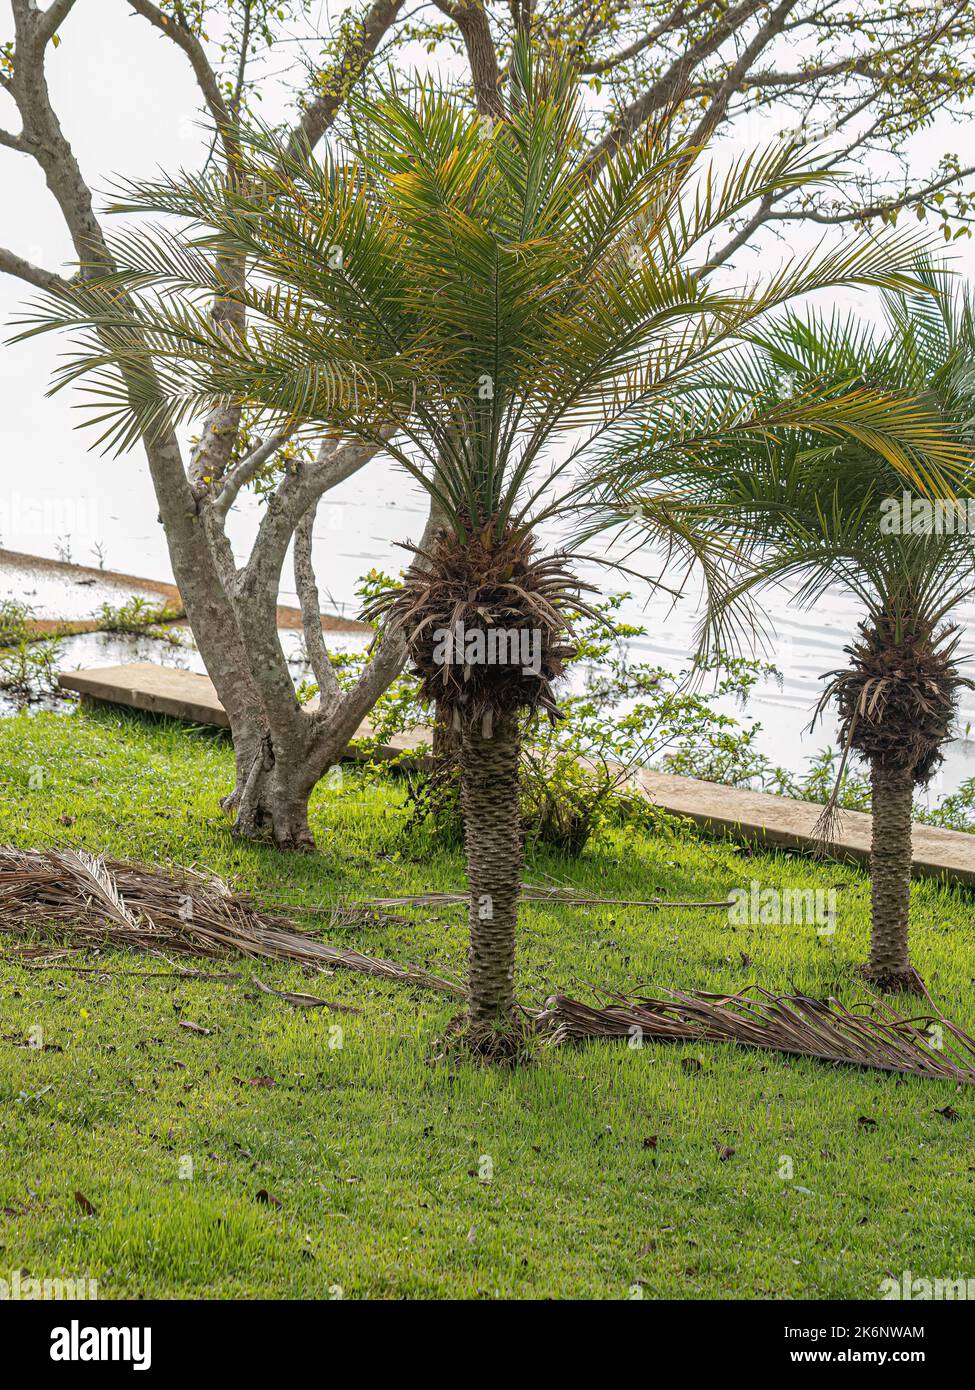 Pygmy Date Palm Tree of the species Phoenix roebelenii Stock Photo